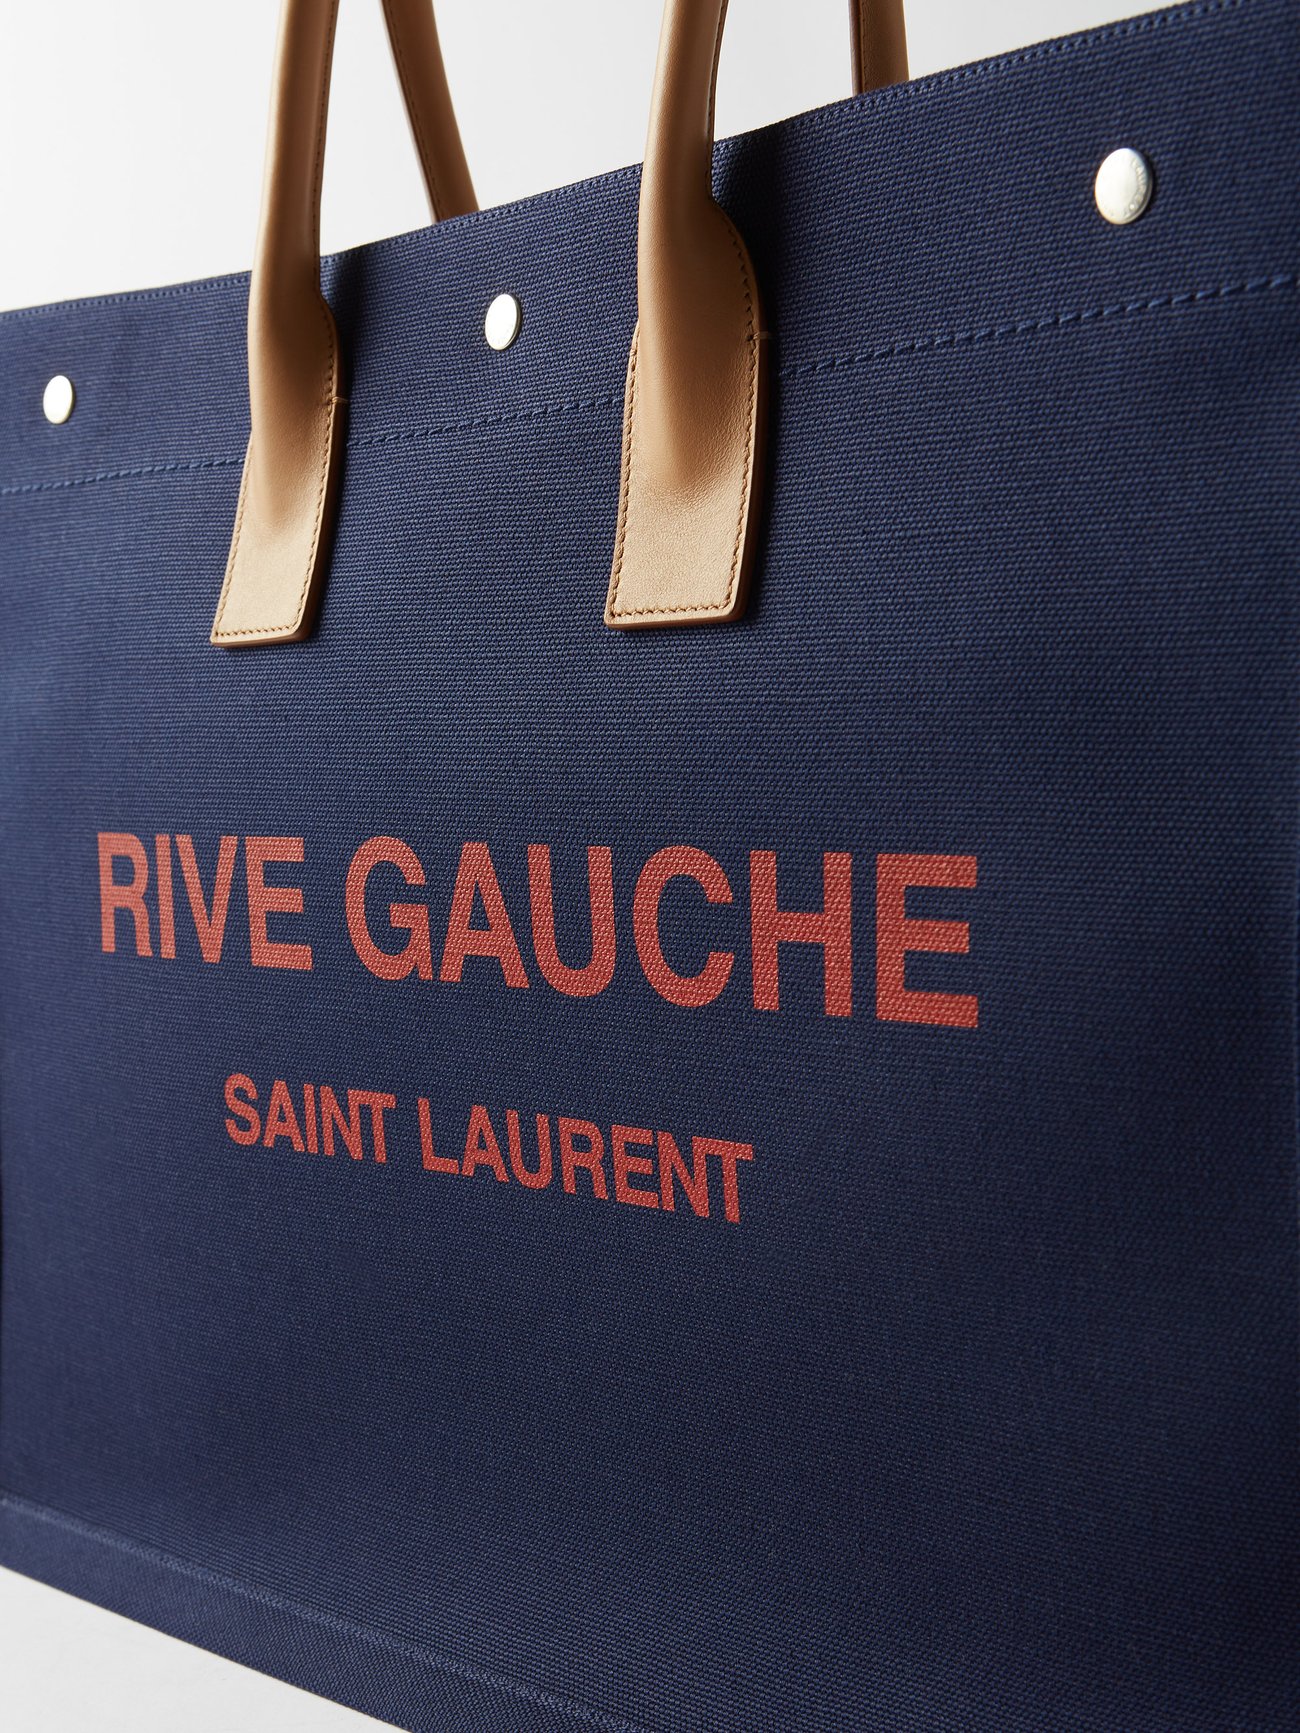 SAINT LAURENT, 'RIVE GAUCHE' CANVAS WEEKENDER TOTE BAG, Men